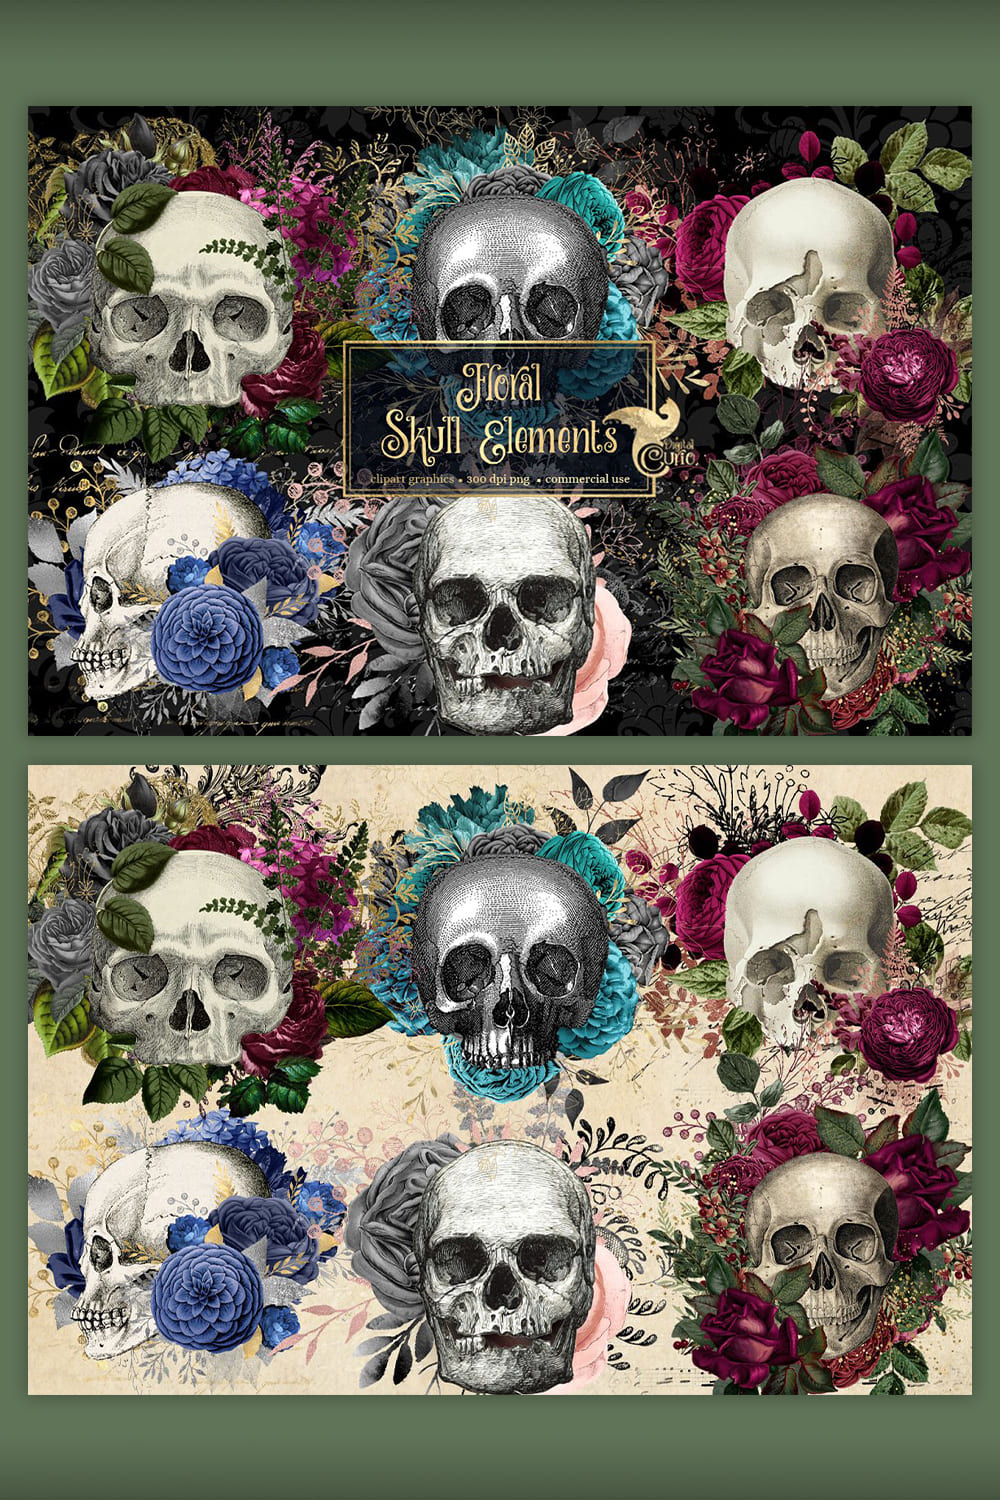 Floral Skull Graphic Elements pinterest image.